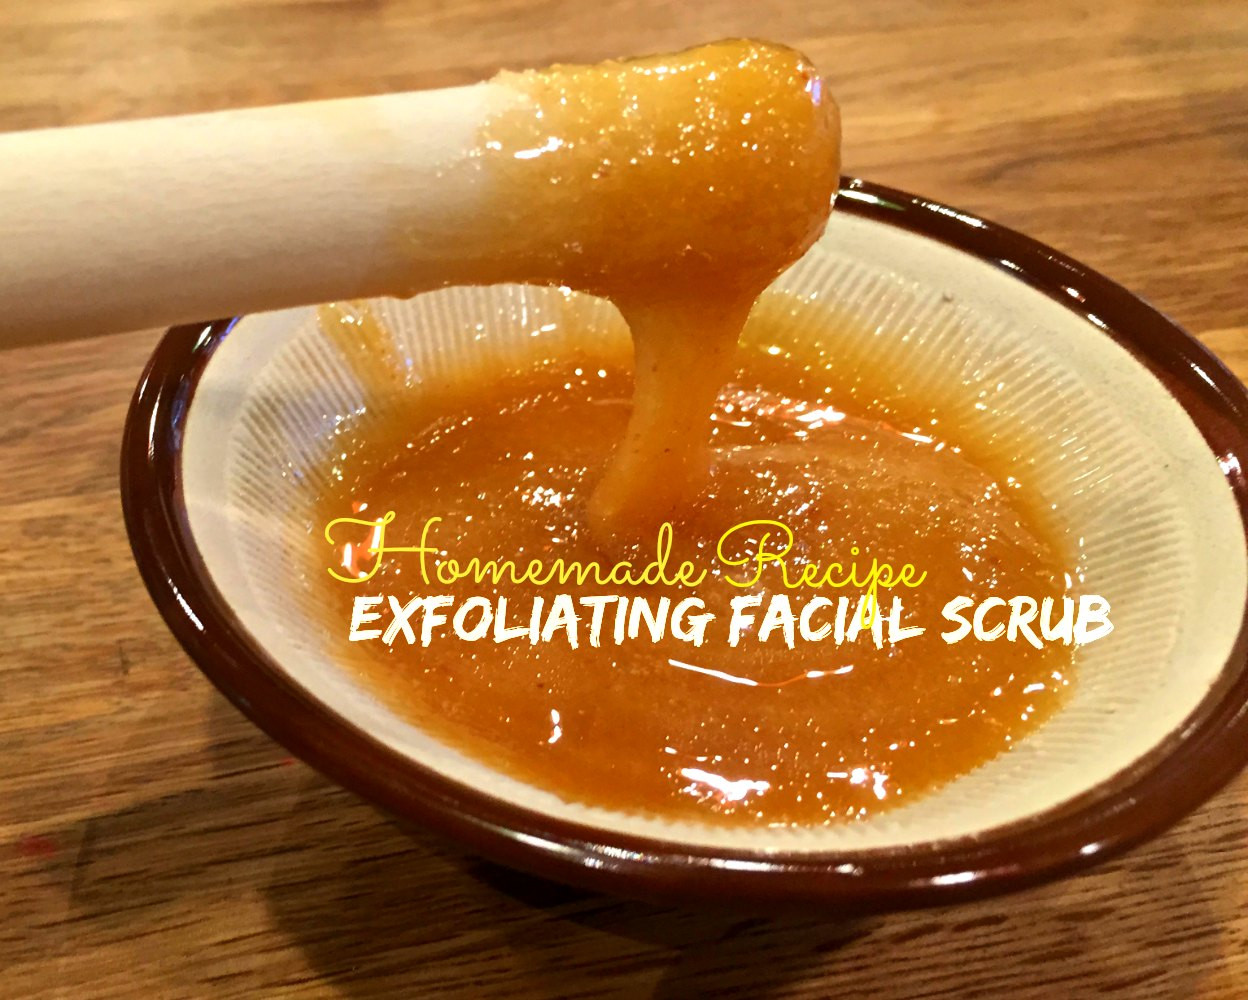 Best ideas about DIY Exfoliating Facial Scrub
. Save or Pin Natural Exfoliating Facial Scrub Recipe Now.